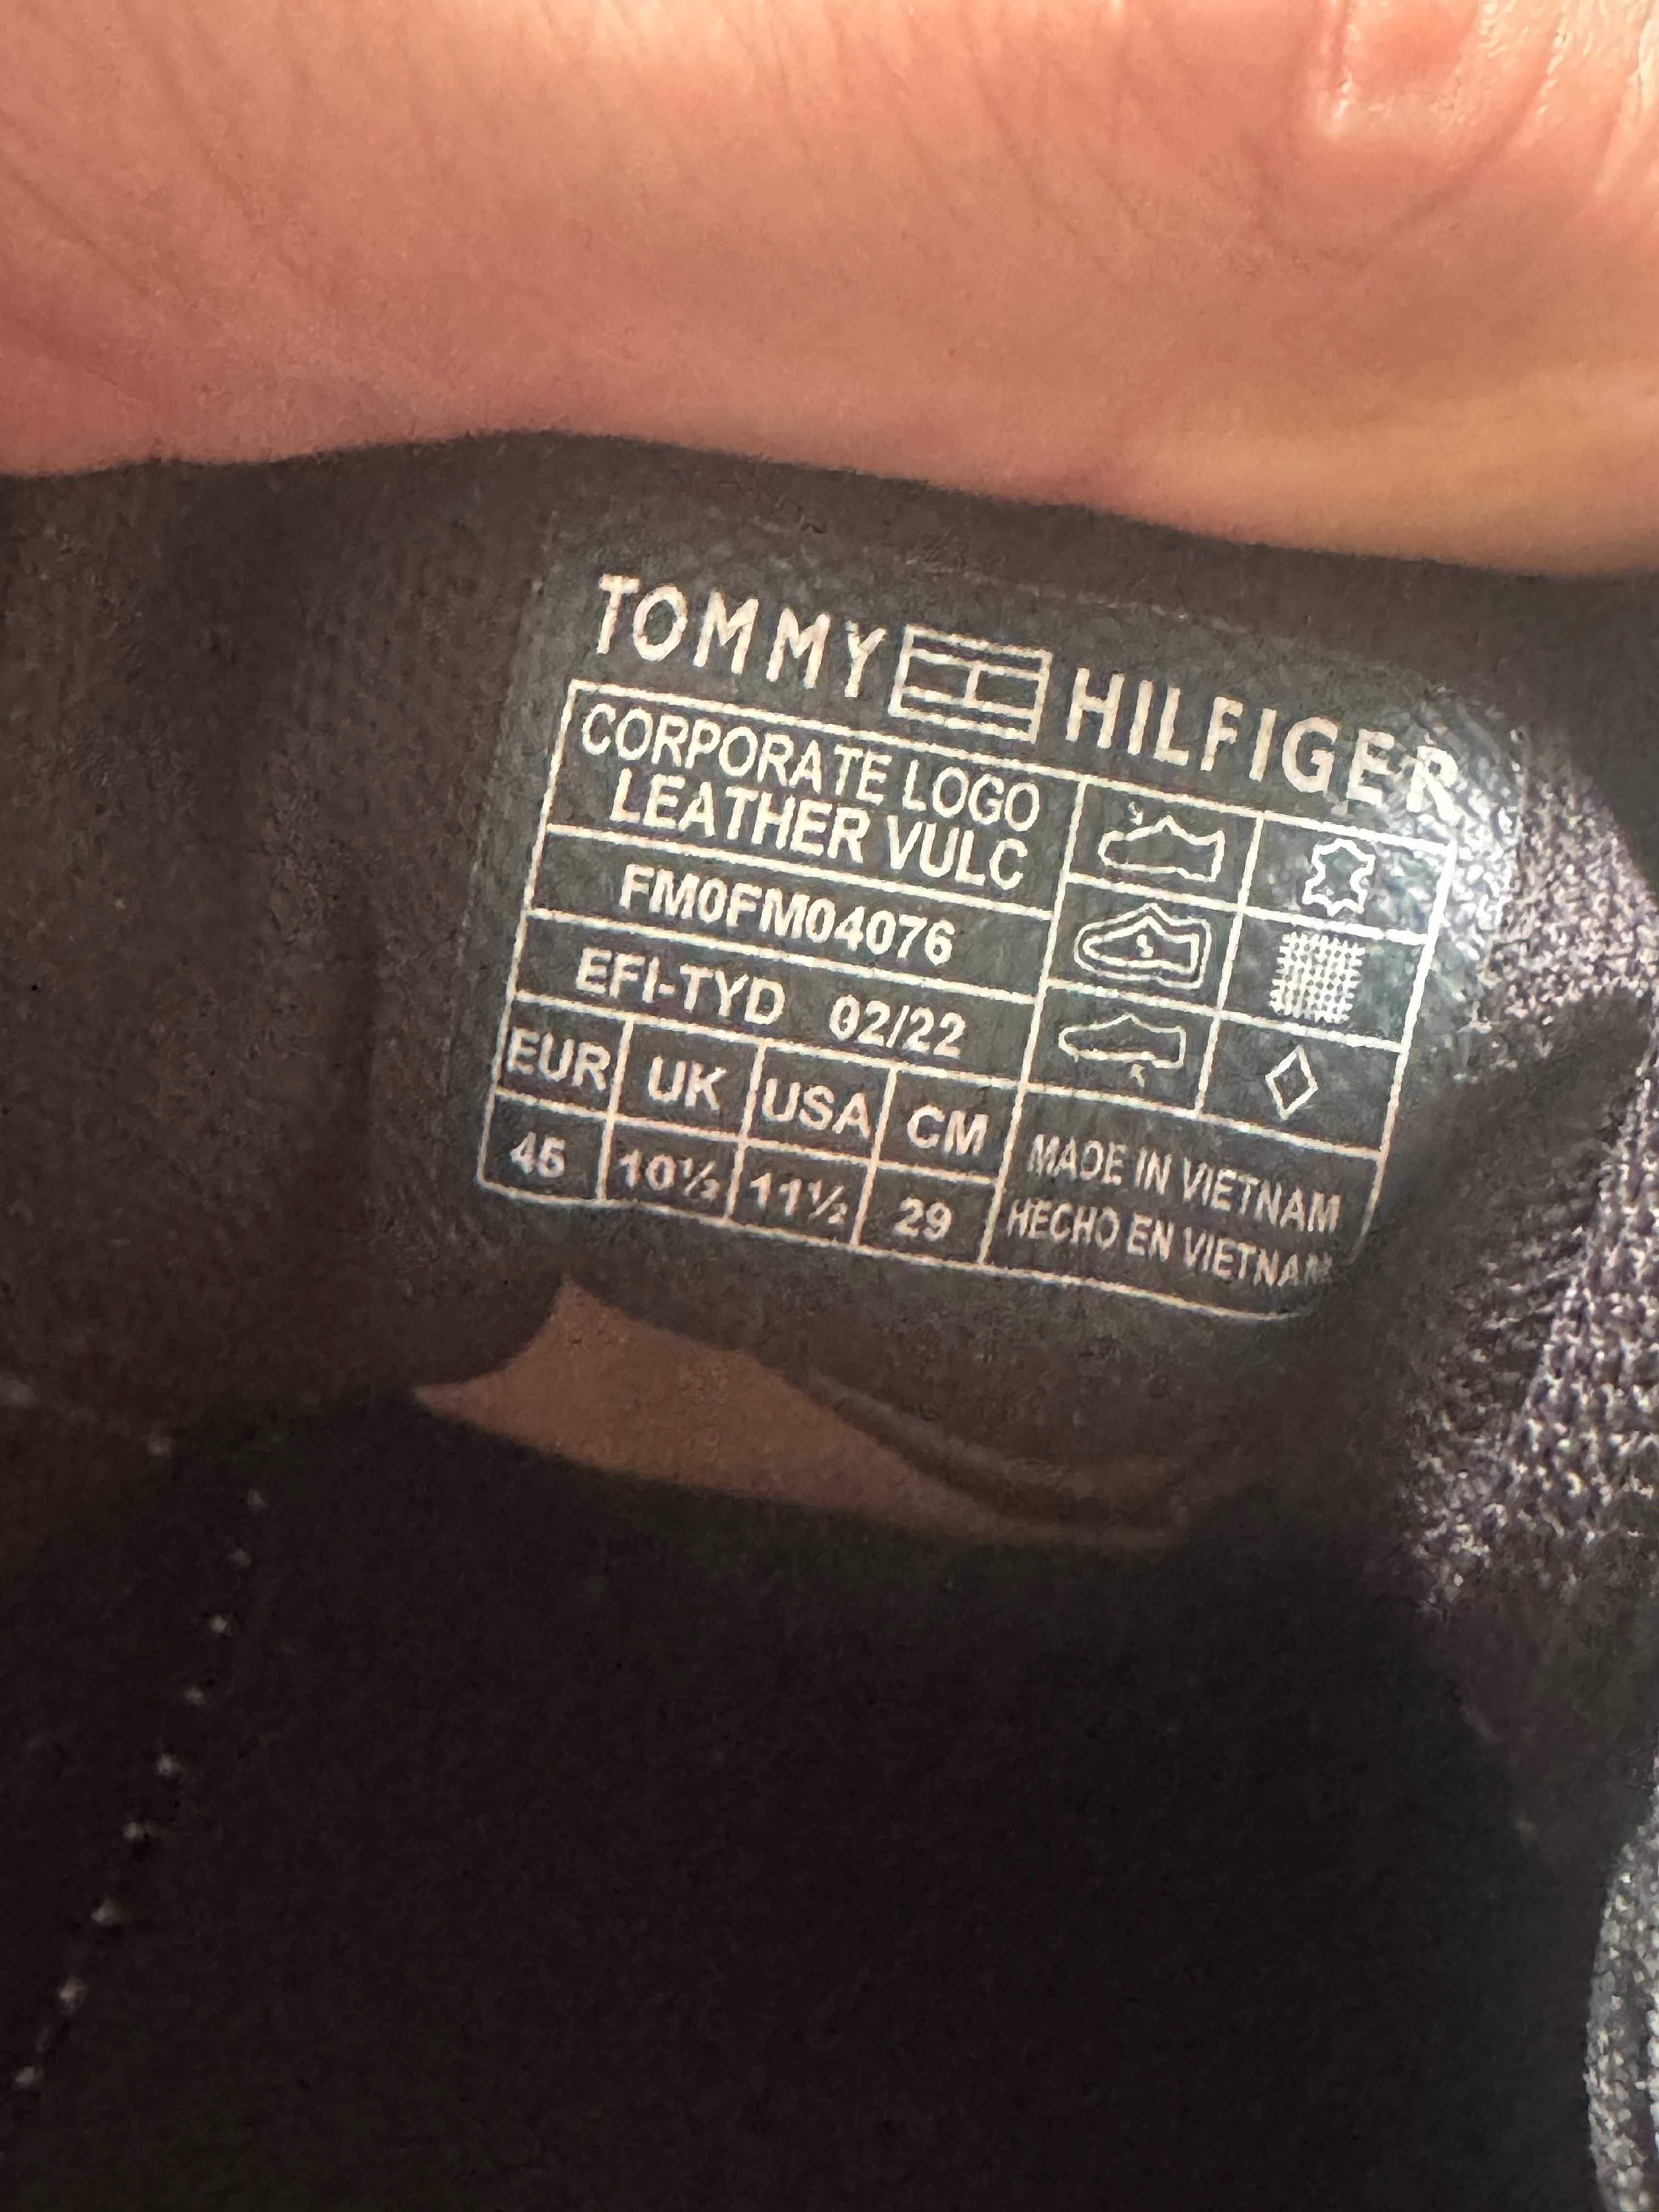 Adidasi piele Tommy Hilfiger Corporate Logo Leather Vulc